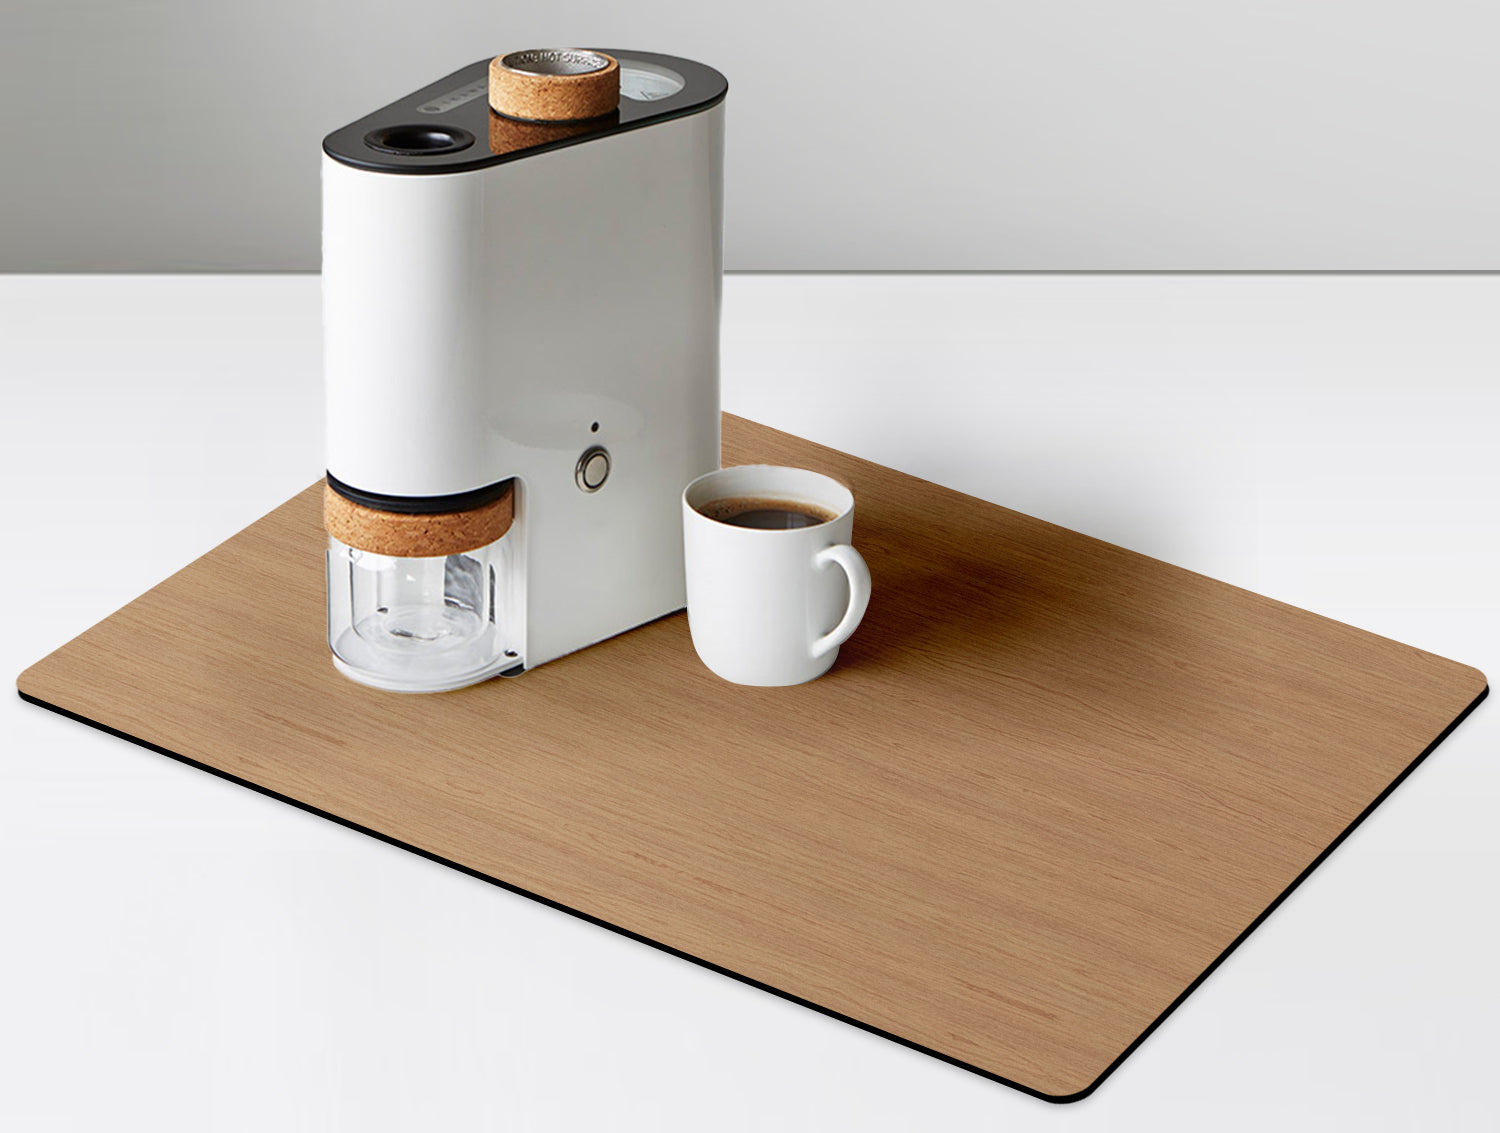 Golener | Best Coffee Maker Mat for Countertops Kitchen Counter Decor 19x12 / Afternoon Tea